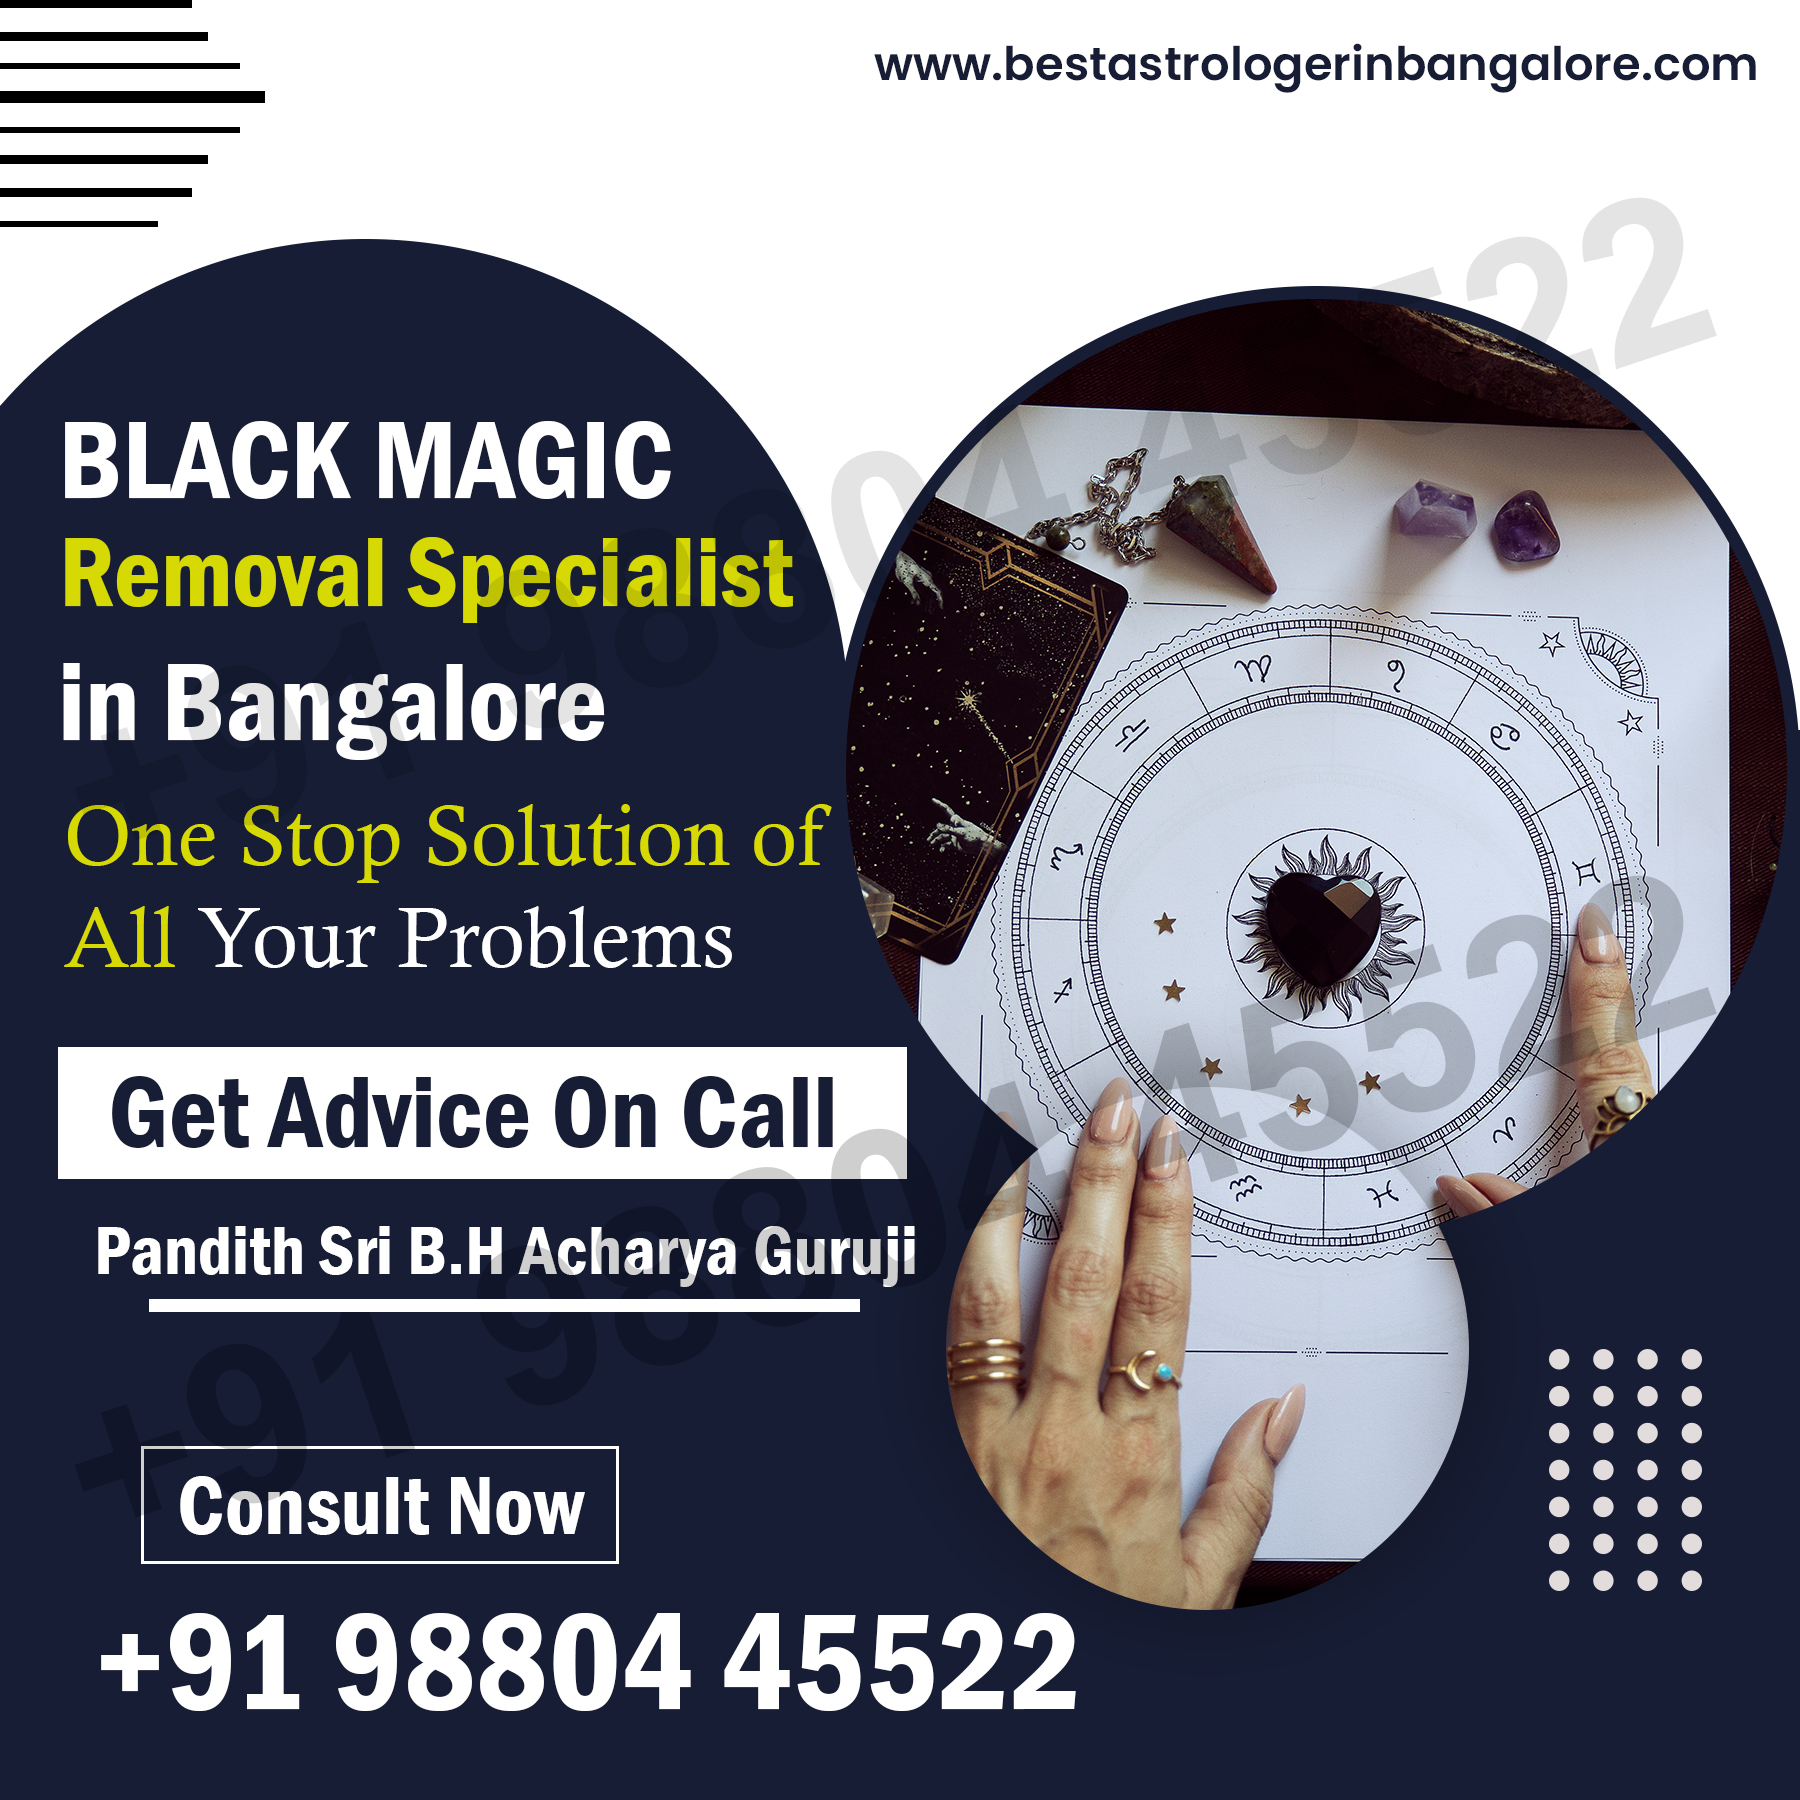 Black Magic Removal Specialist in Bangalore